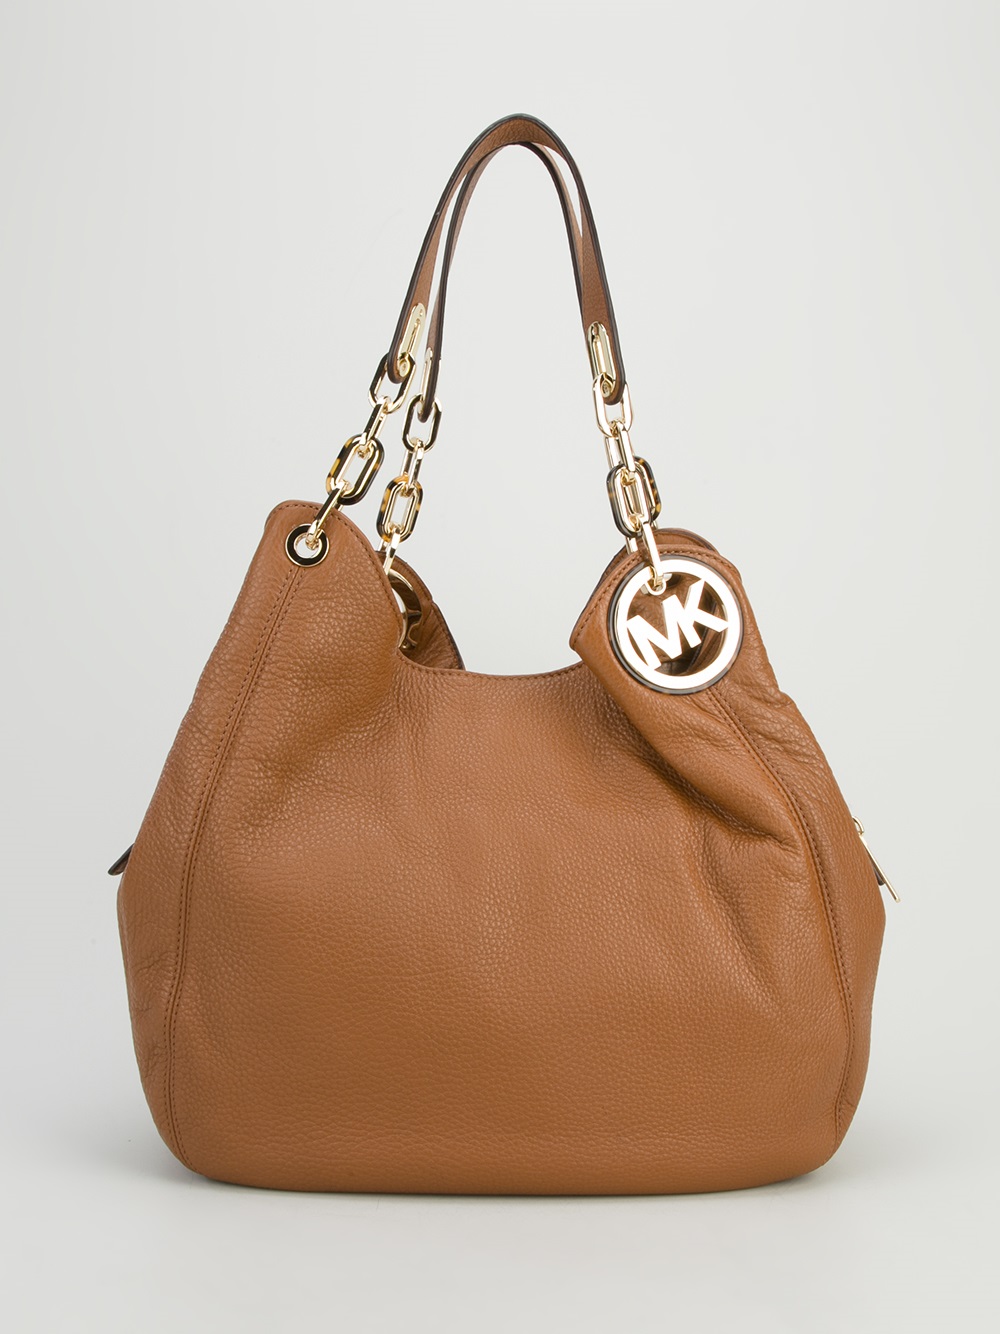 Brown leather Michael Kors purse